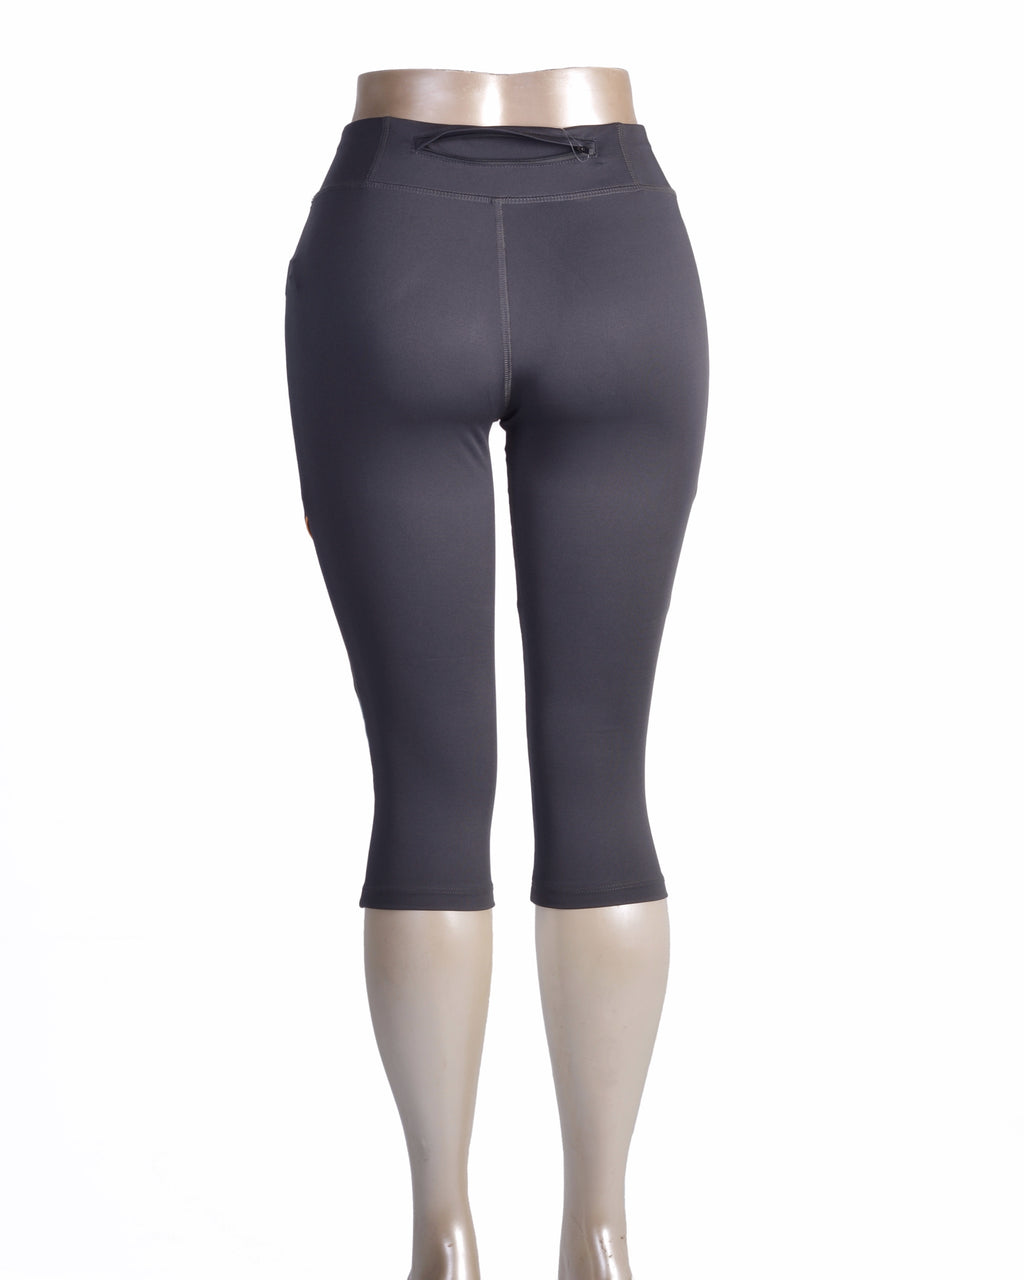 Newcential Women Shorts Capri Tights-Deep Grey and light blue